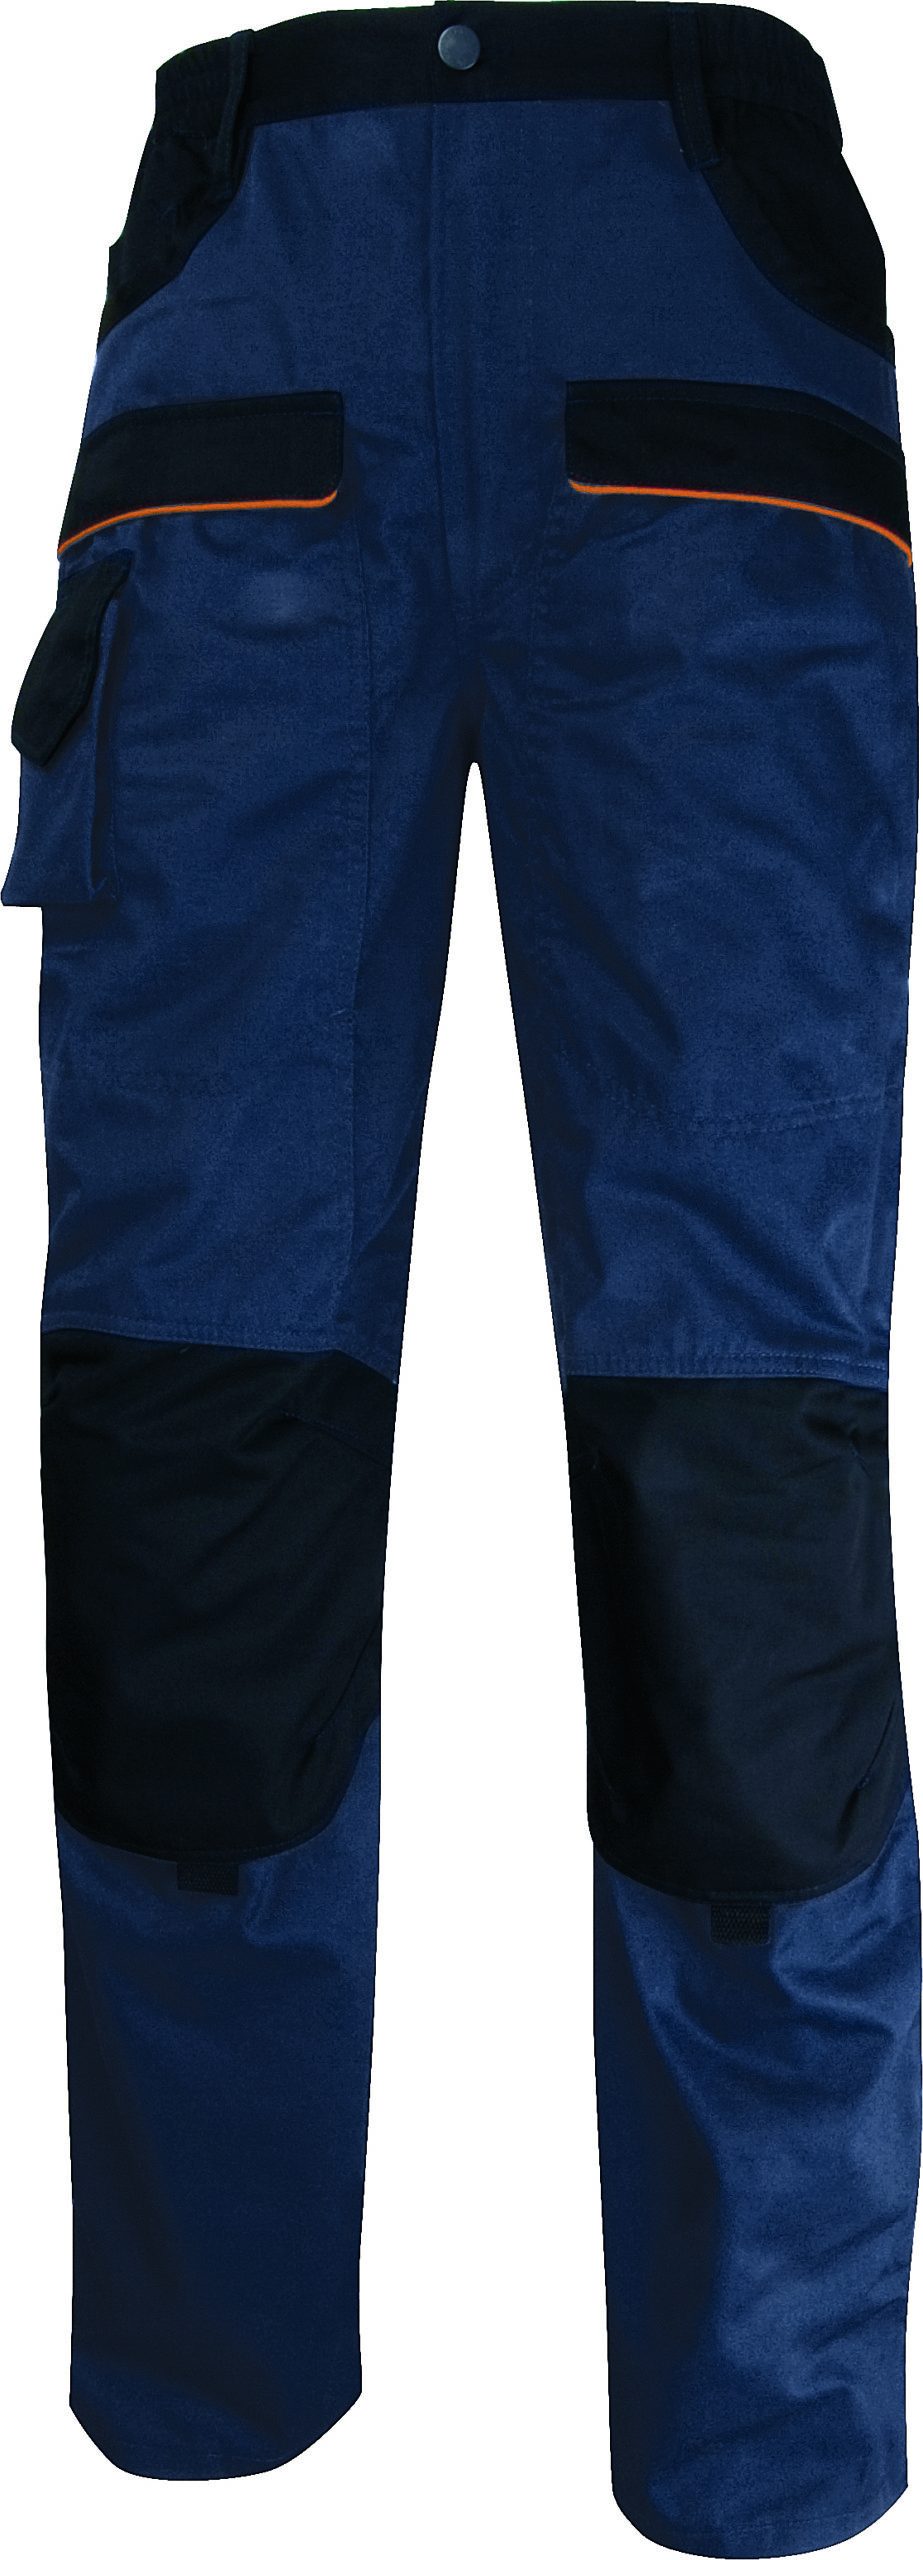 Pantalone da Lavoro Mach 2 Blu Nero Tg Xl Mcpa2mnxg 3295249230814